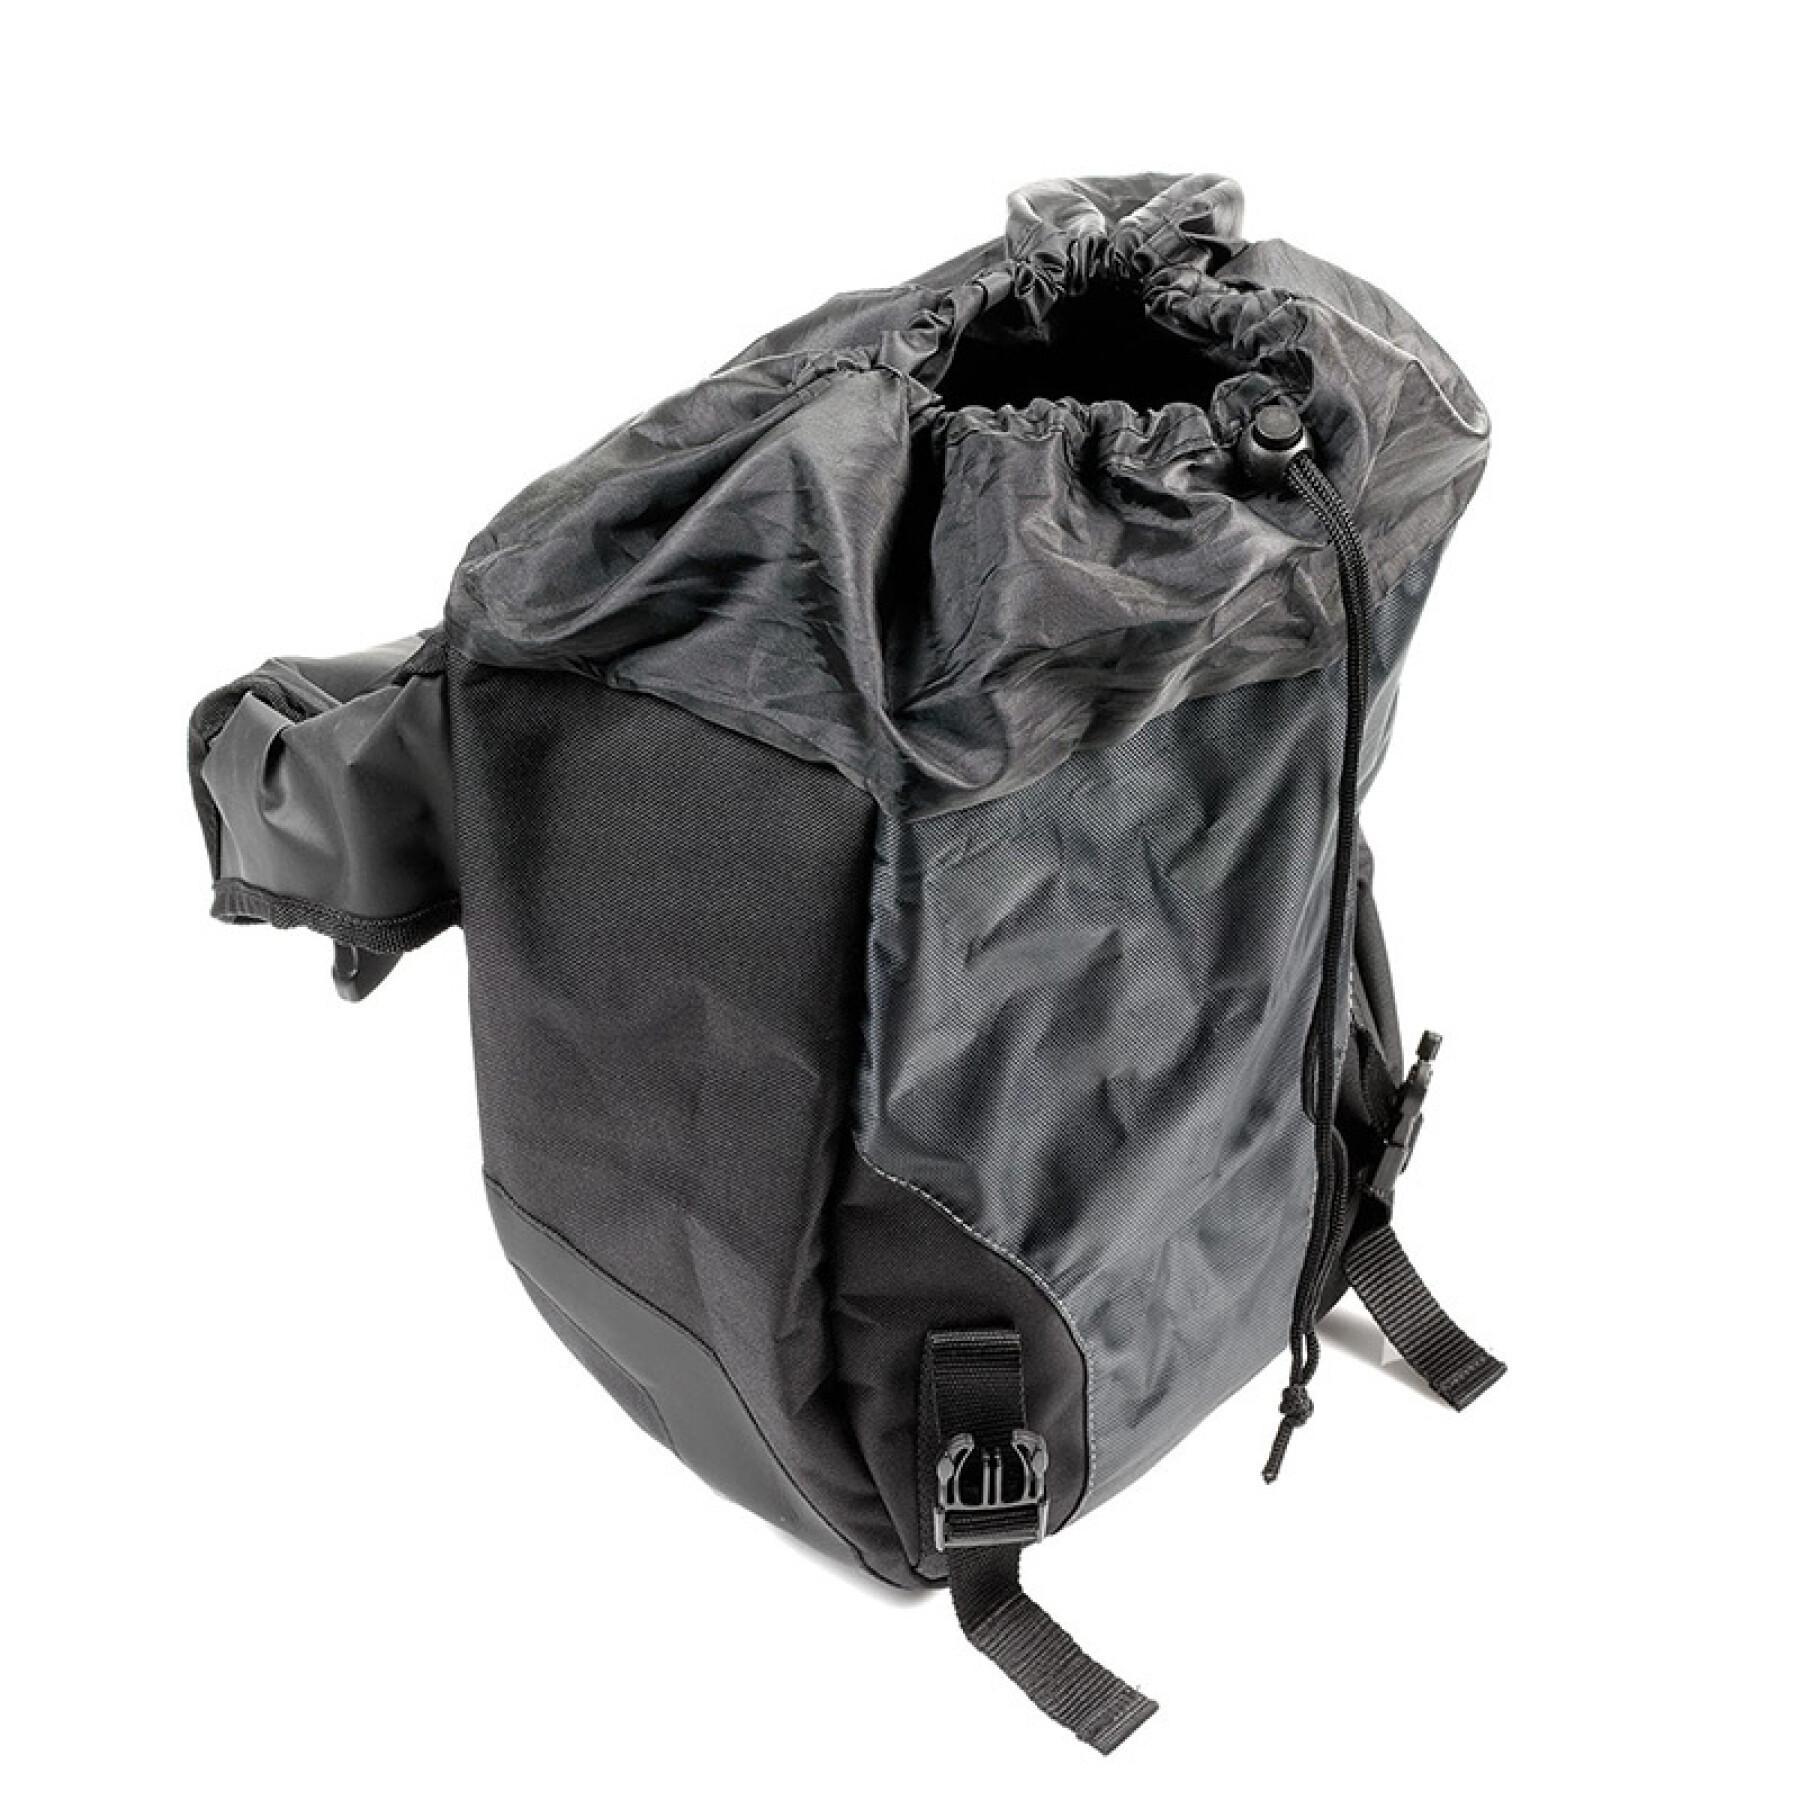 Bike carrier bag with 2 outside pockets XLC Ba-s40